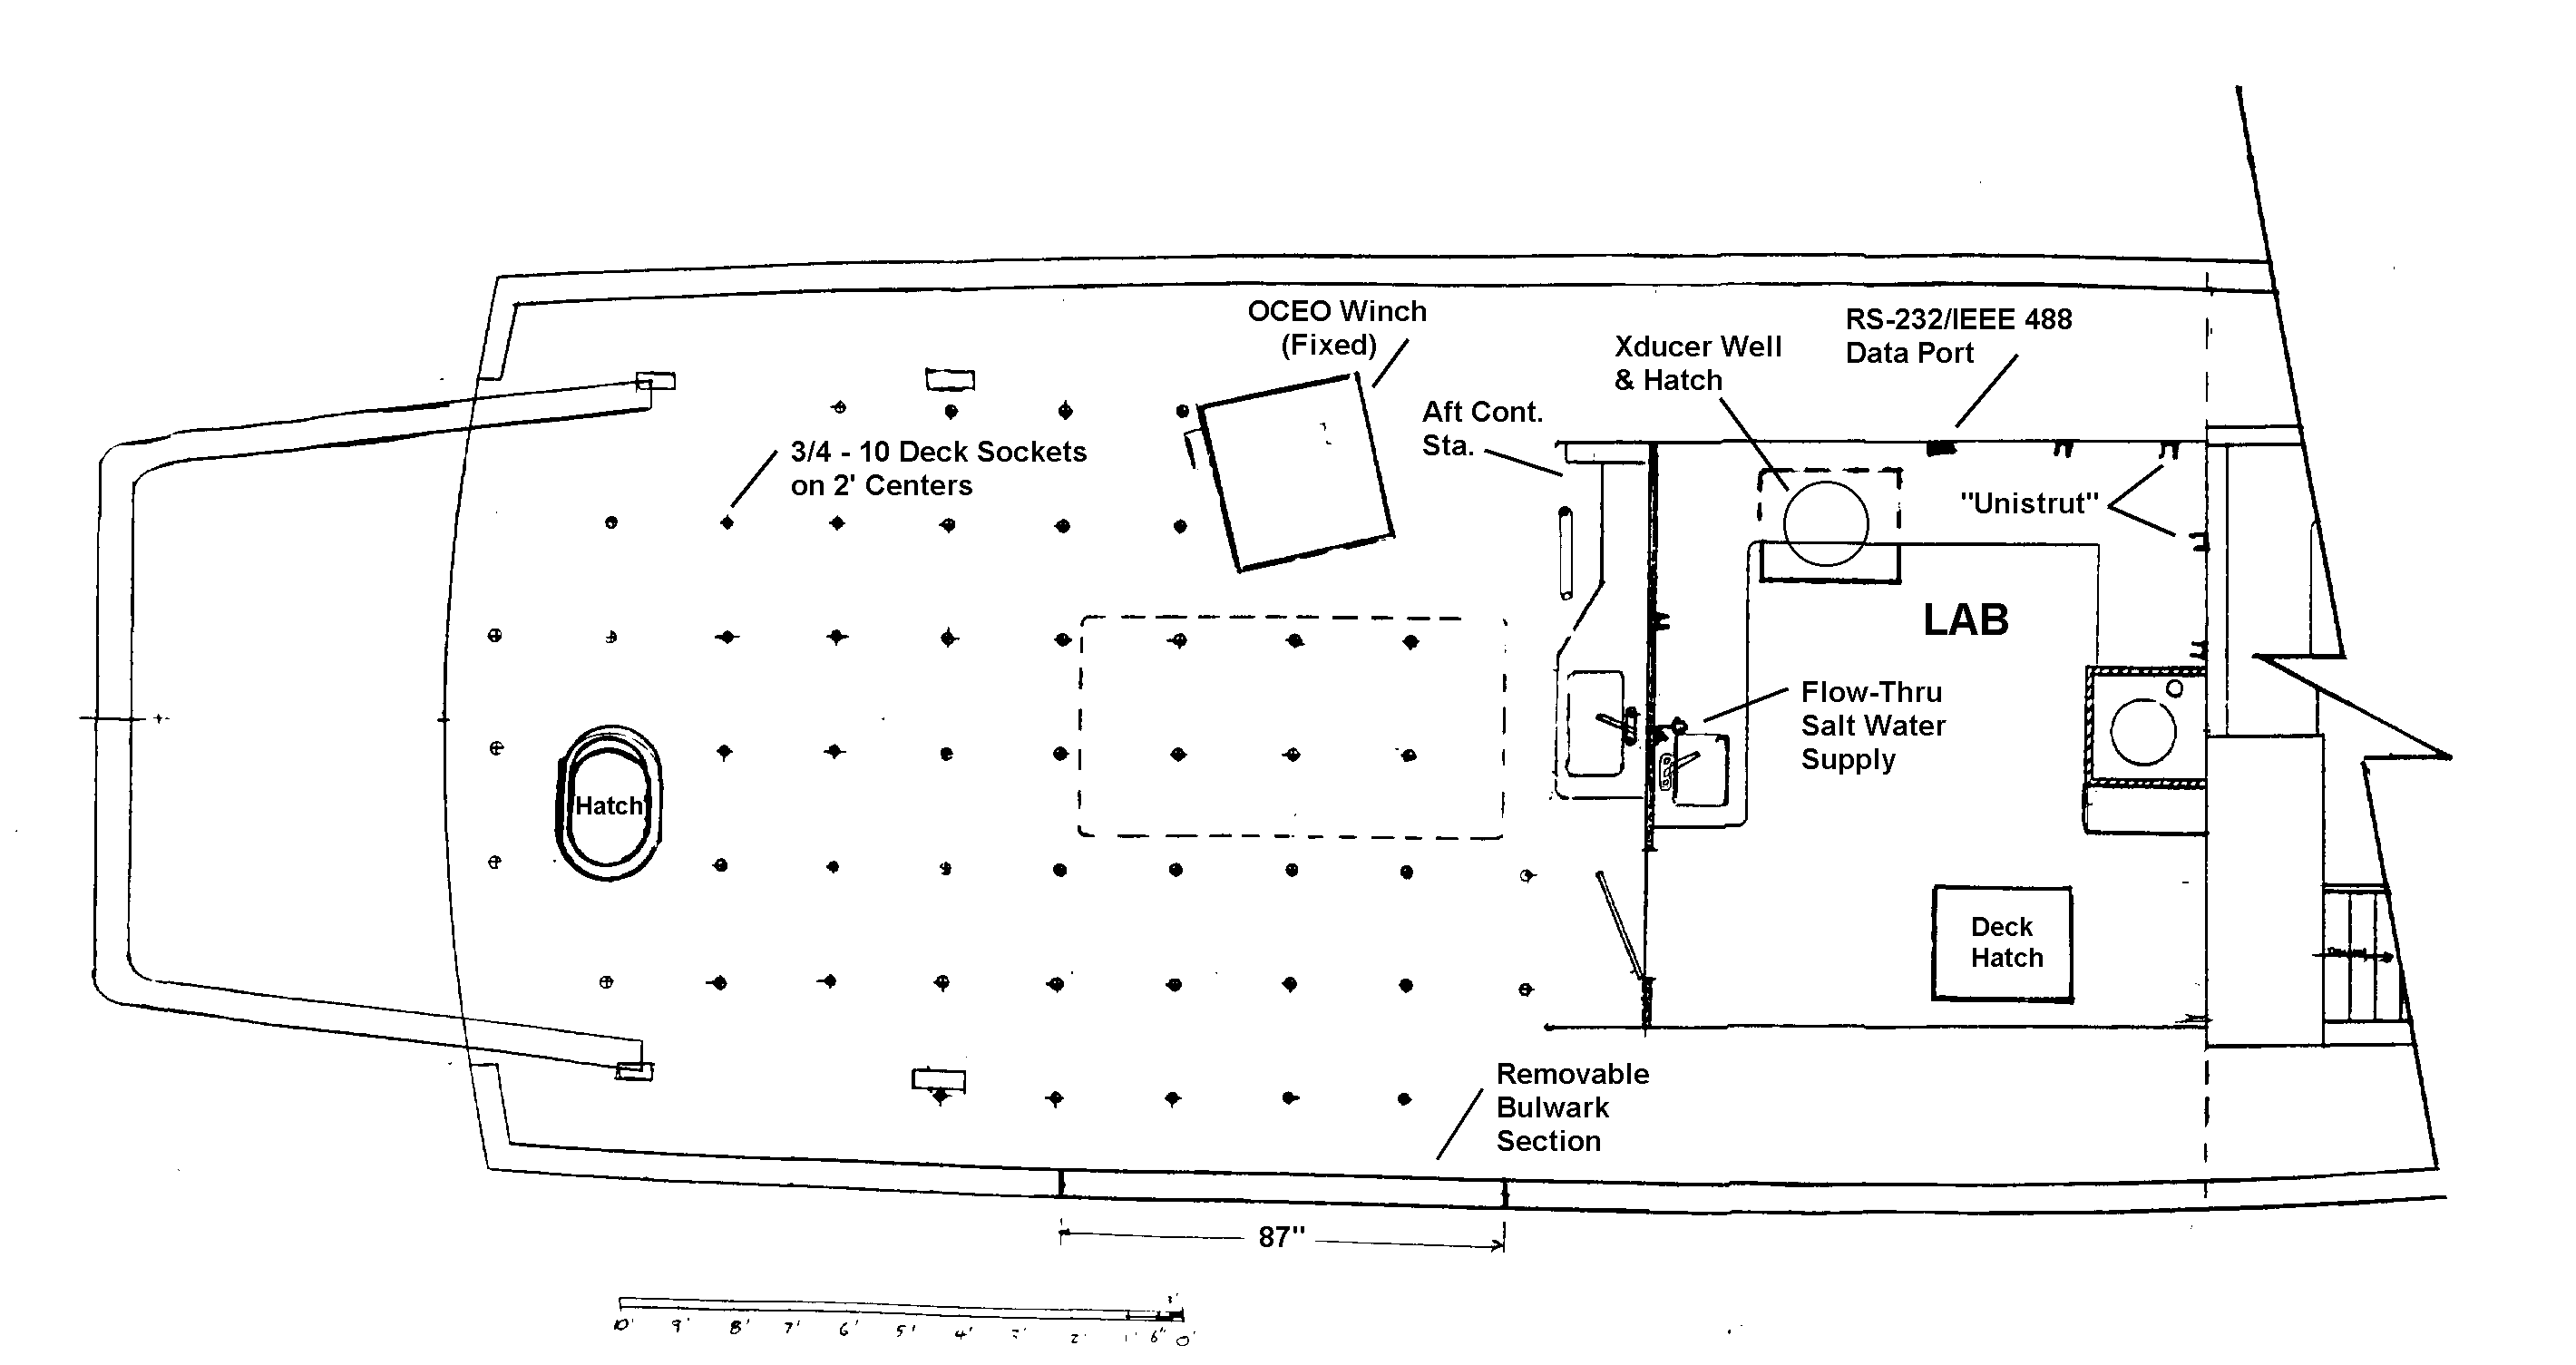 Sketch of Elakha Work Areas